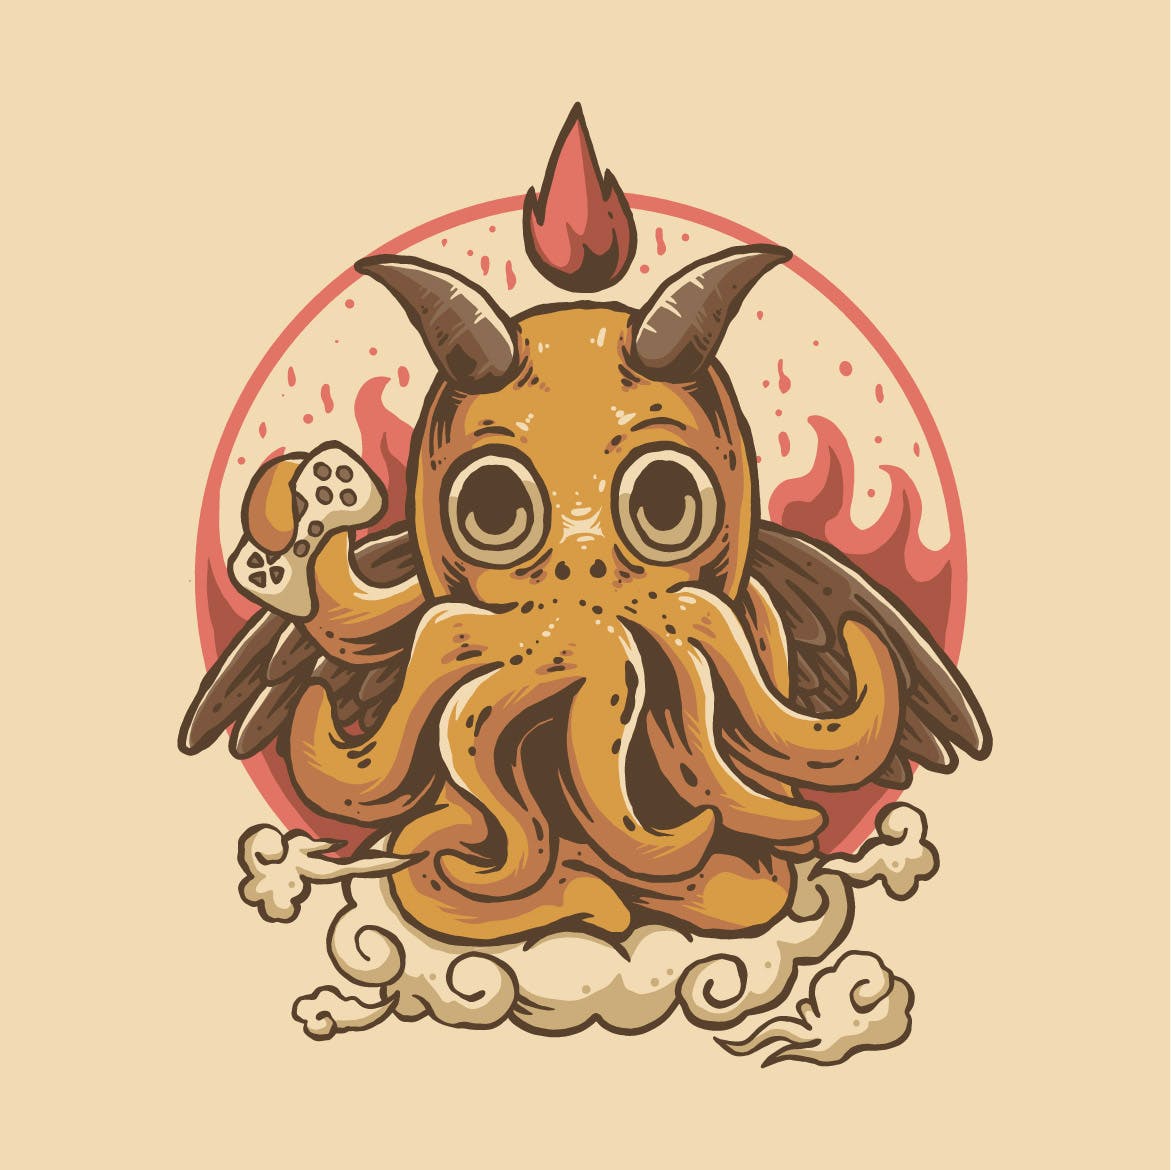 游戏鱿鱼Logo插画设计 game squid illustration design 图片素材 第2张